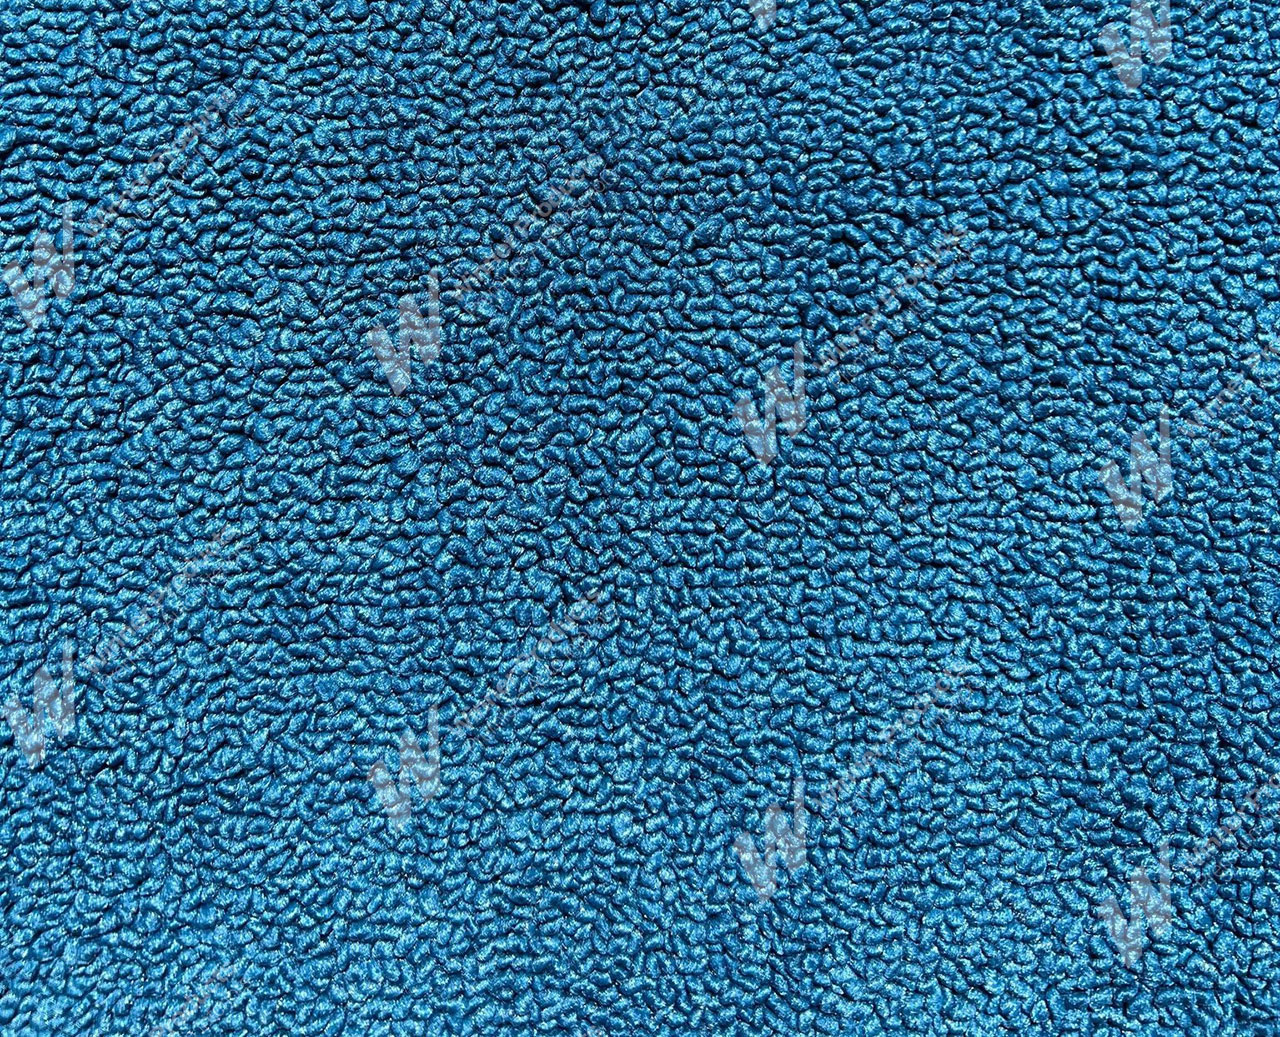 Holden Premier HZ Premier Wagon 23C Light Blue & Cloth Carpet (Image 1 of 1)